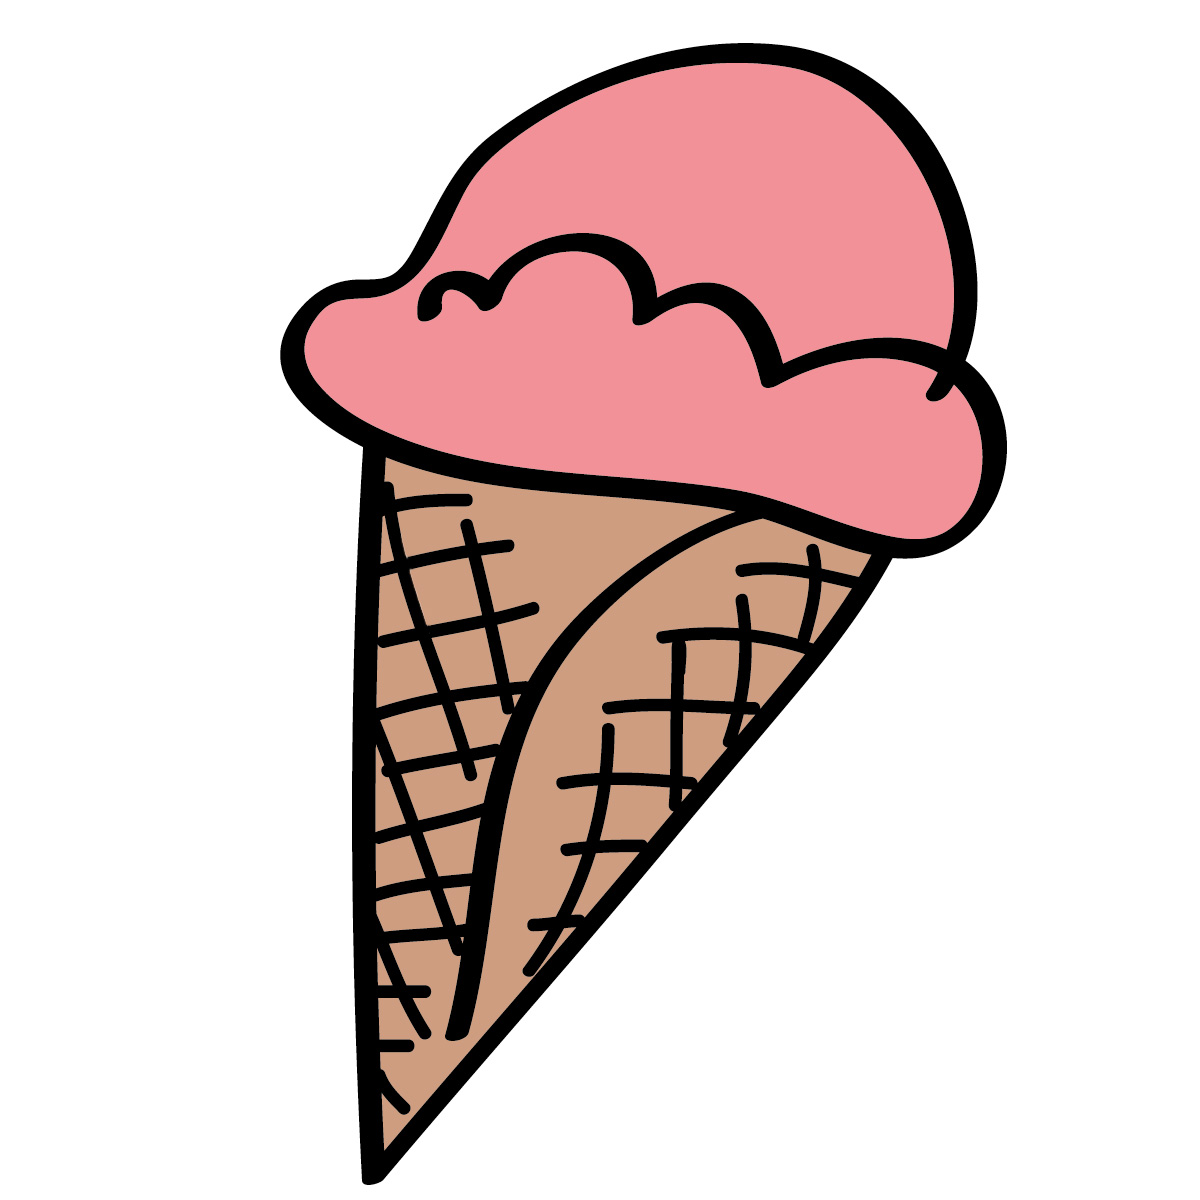 Ice cream cone ice creamne clipart free clipart images 3.